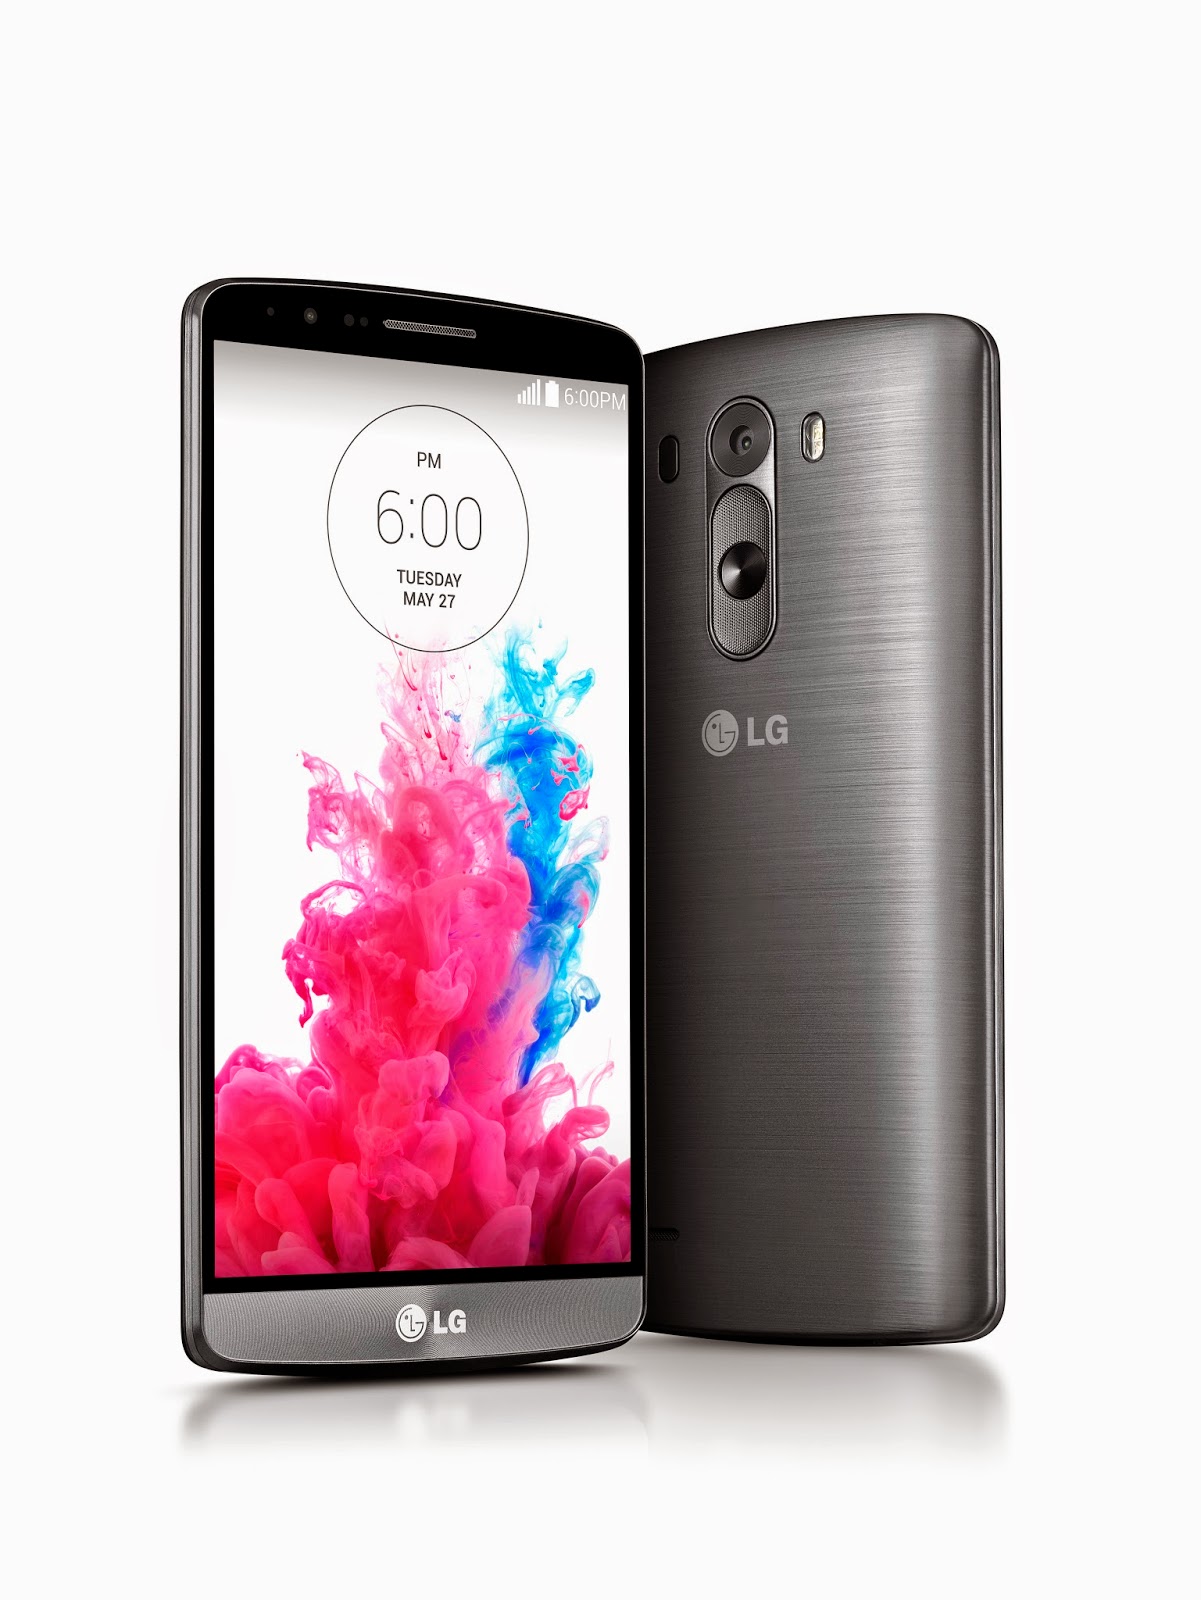 LG's Latest Smart Phone - the dynamic LG G3!